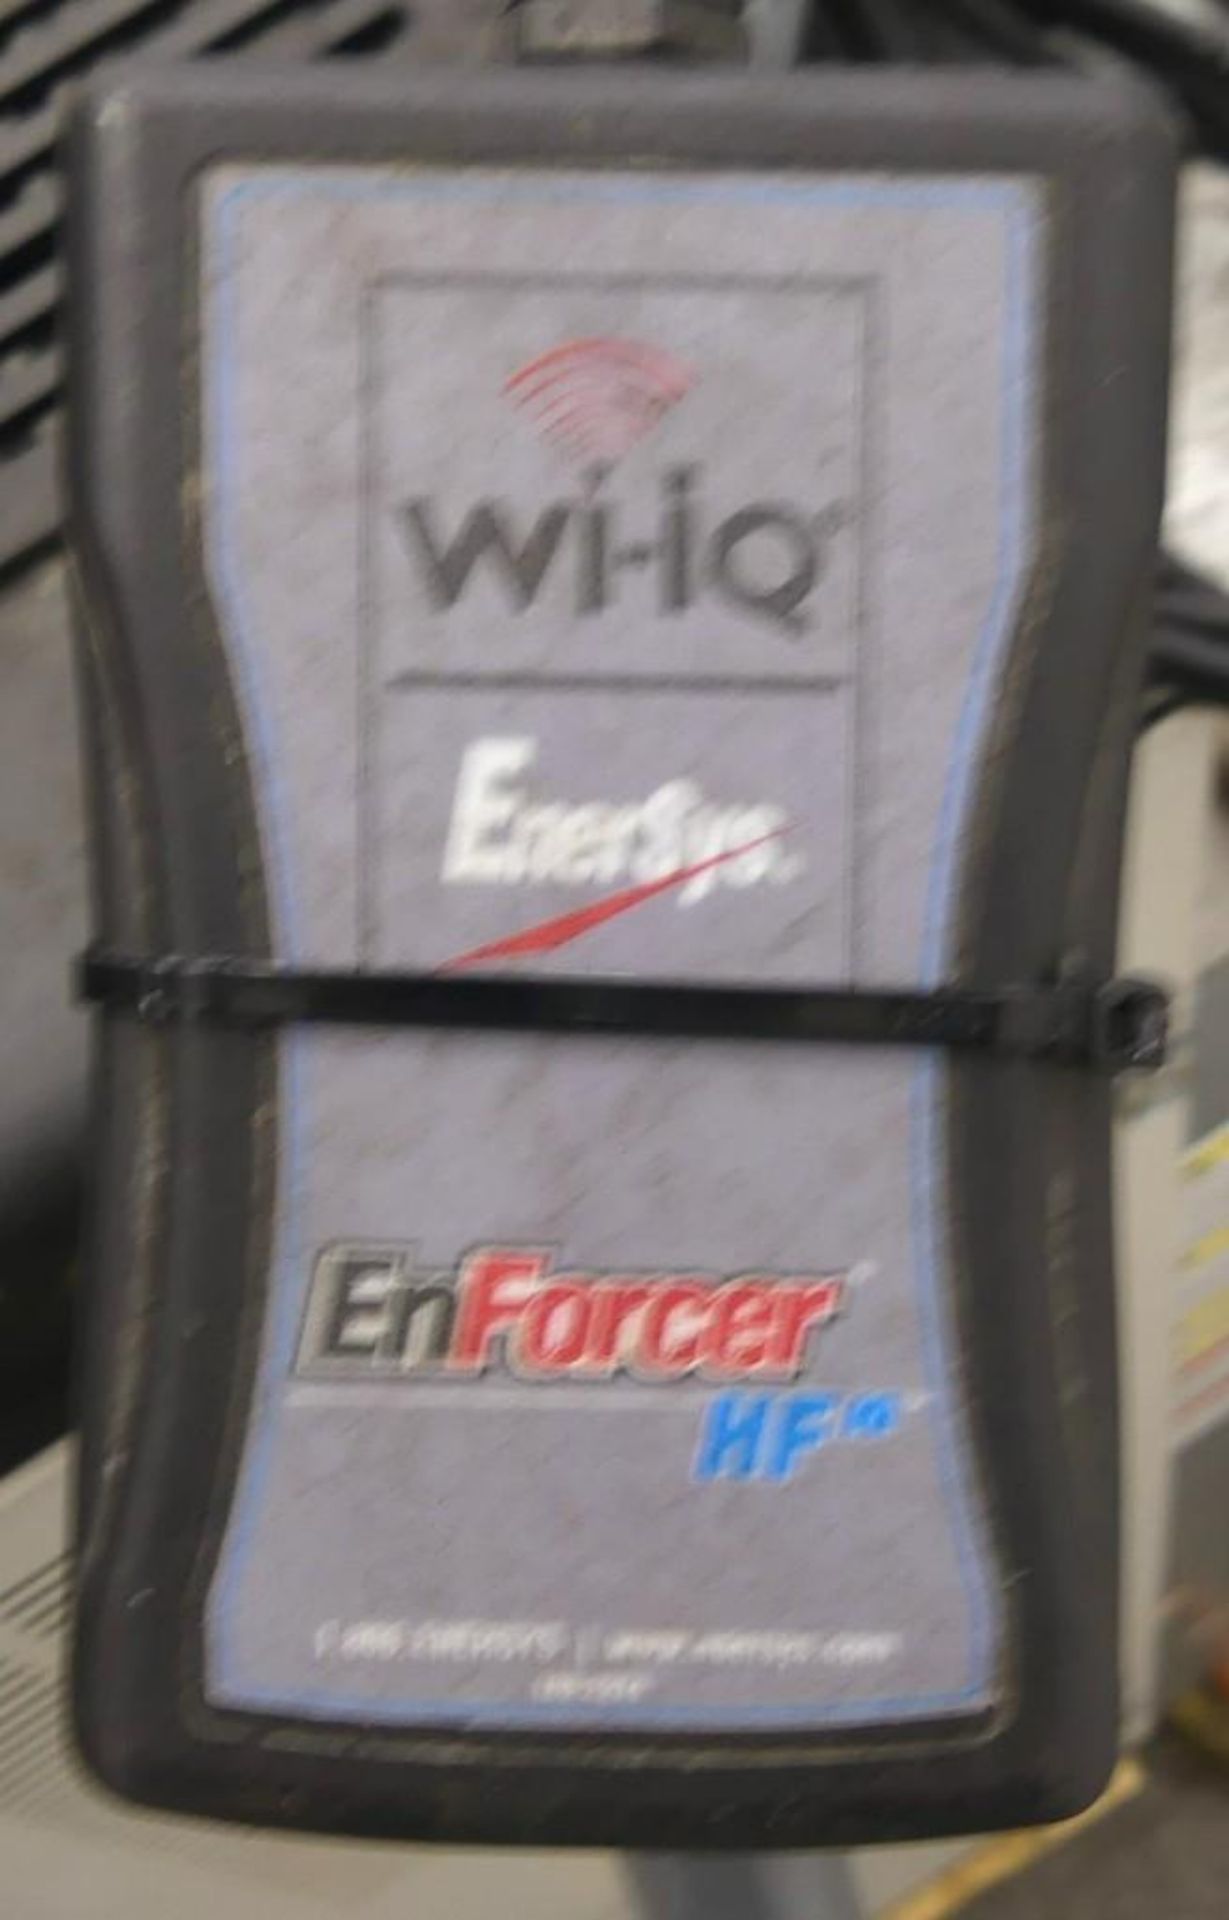 EnerSys EnForcer HF IQ Forklift Battery Charger - Image 7 of 9